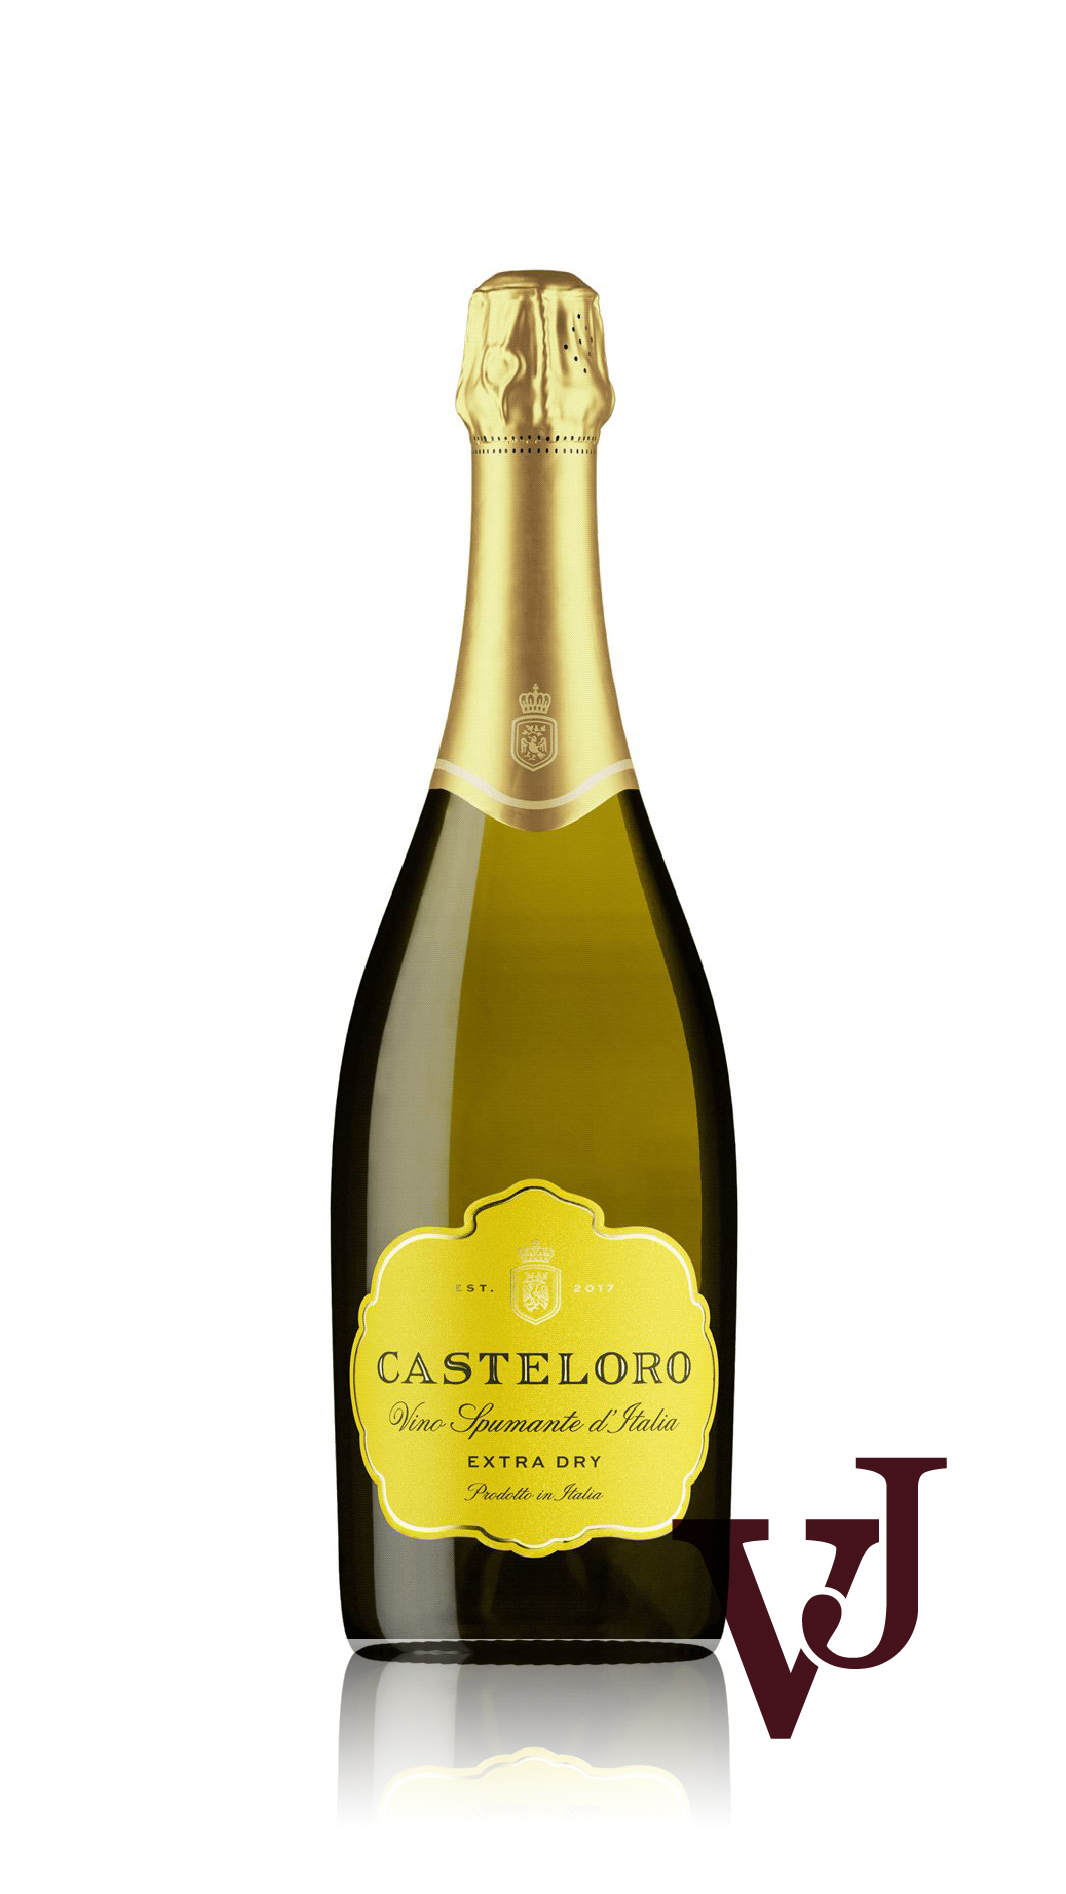 Mousserande Vin - Casteloro Spumante artikel nummer 5686901 från producenten Fields Wine Company AB från Italien.